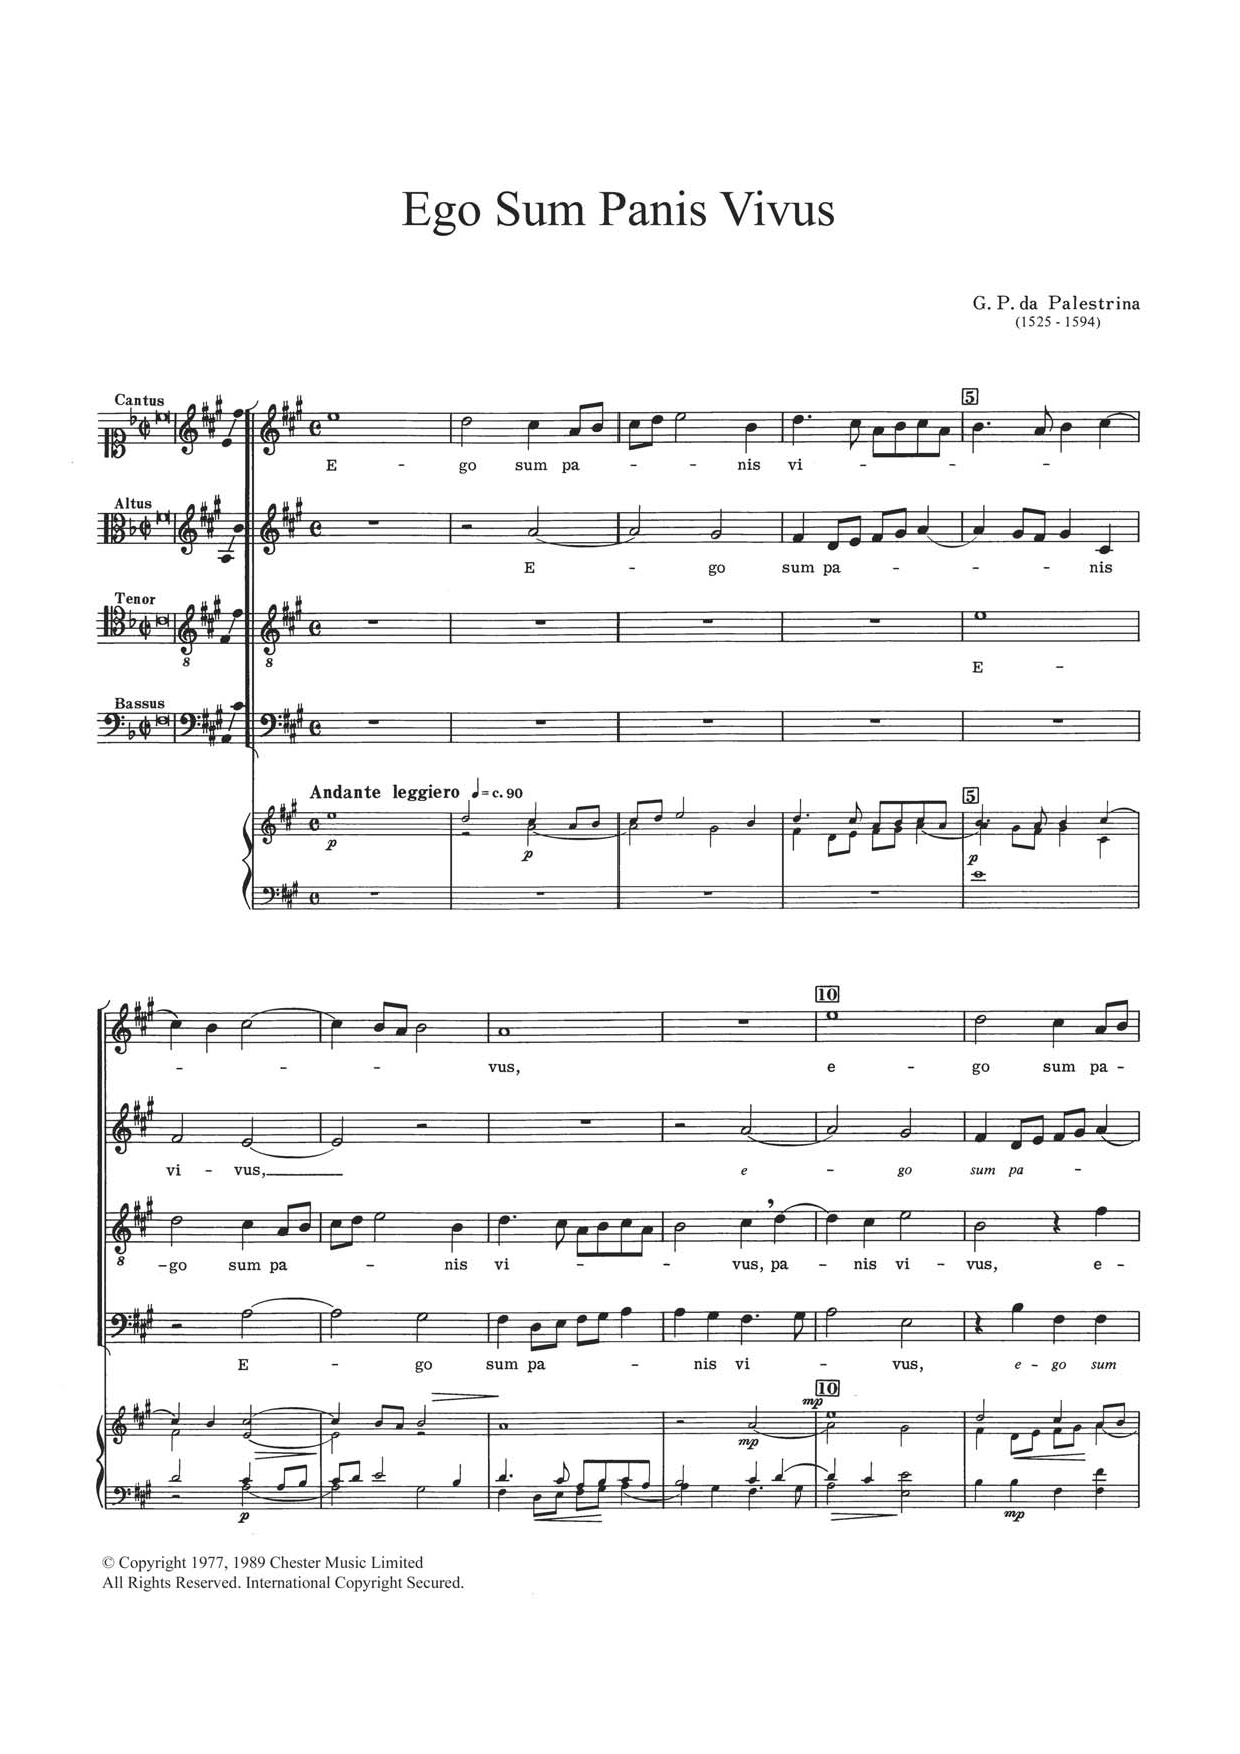 Giovanni Palestrina Ego Sum Panis Vivus Sheet Music Notes & Chords for Choir - Download or Print PDF